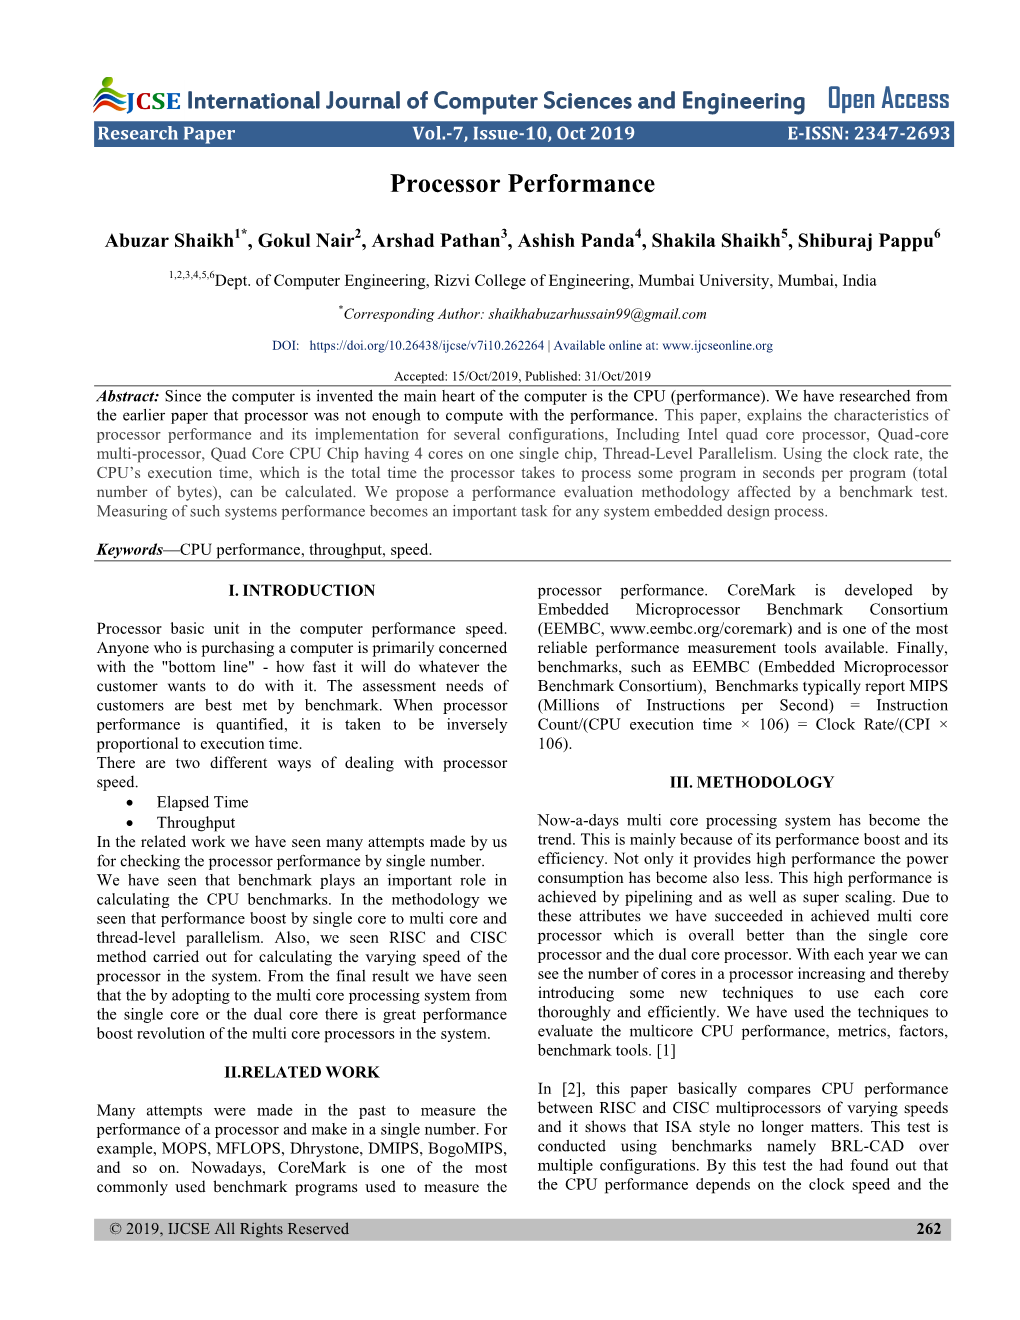 Processor Performance